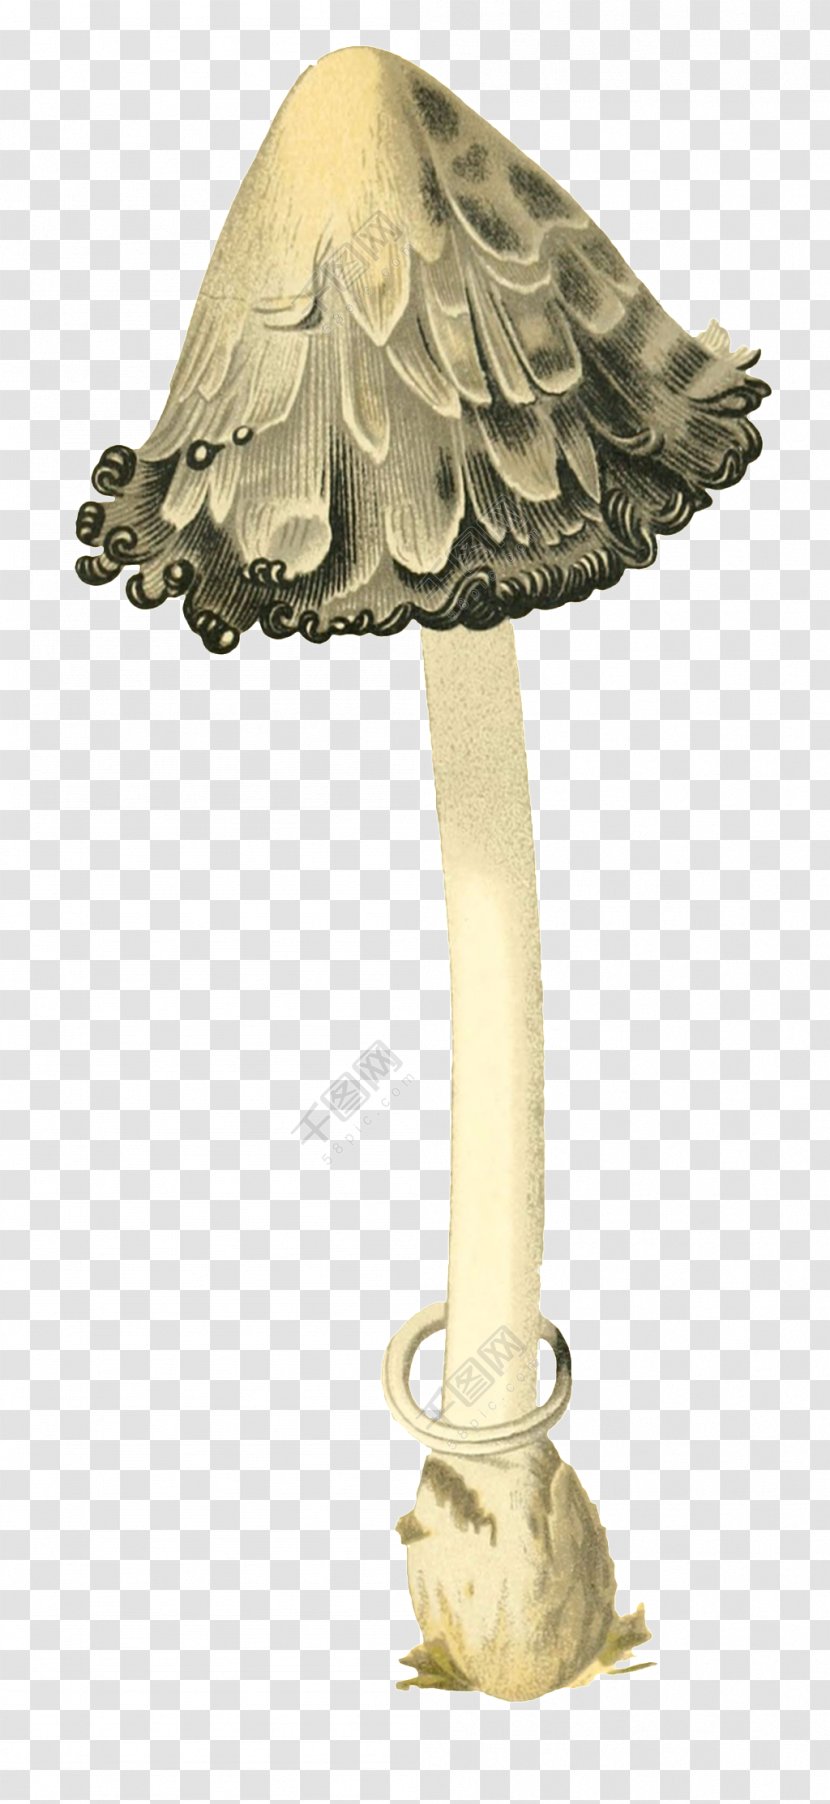 Stock Photography Royalty-free Mushroom Image - Brass - Wild Mushrooms Transparent PNG